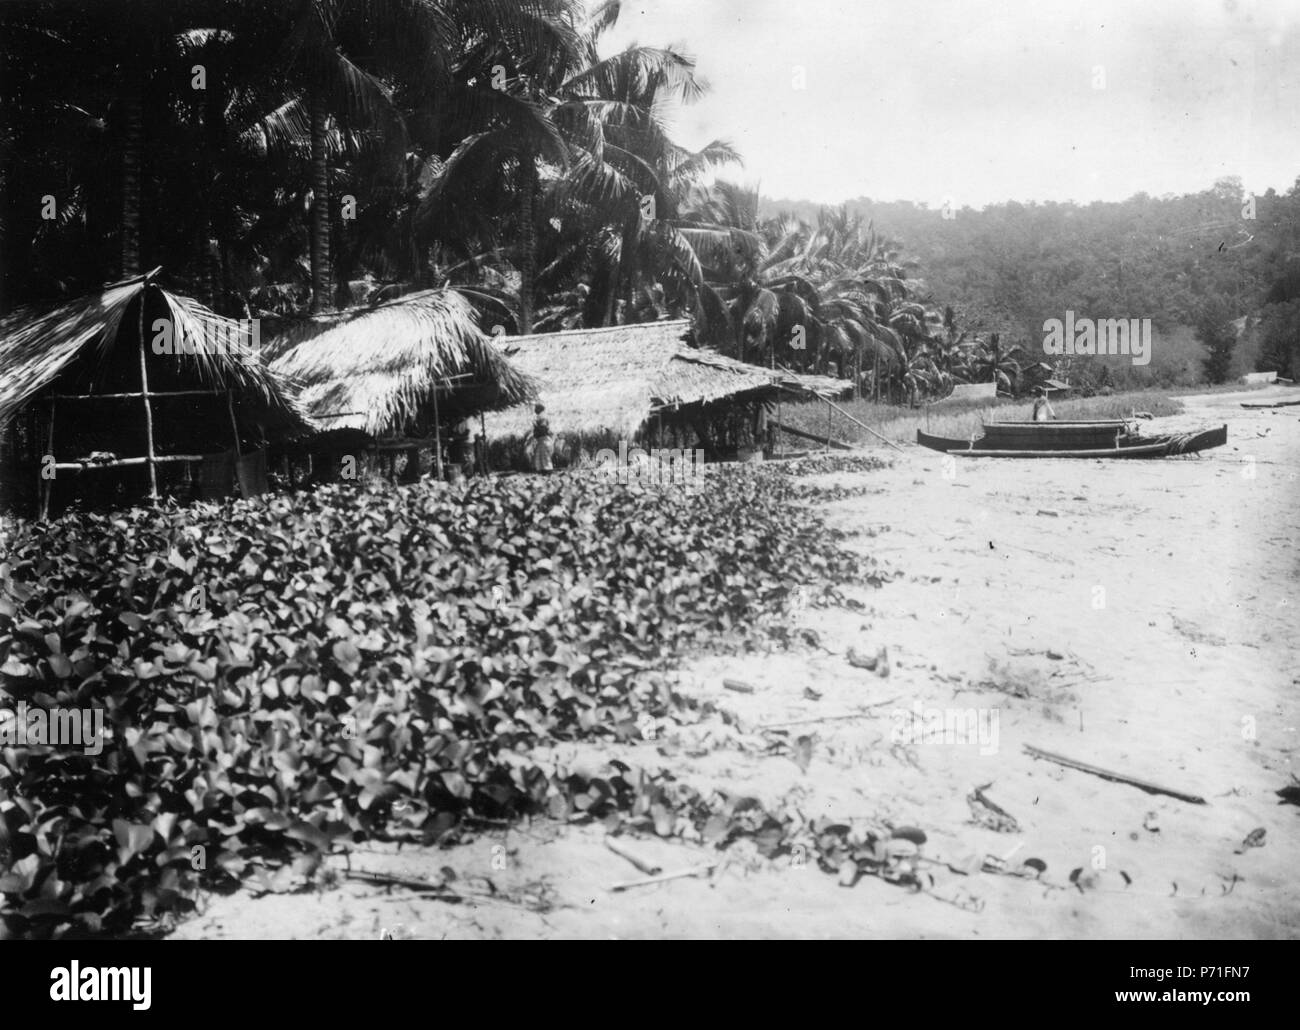 52 Strandparti med hyddor, båtar, kokospalmer (batater ). Kabupaten Bolaang Mongondow, Sulawesi - SMVK - 010677 Stock Photo